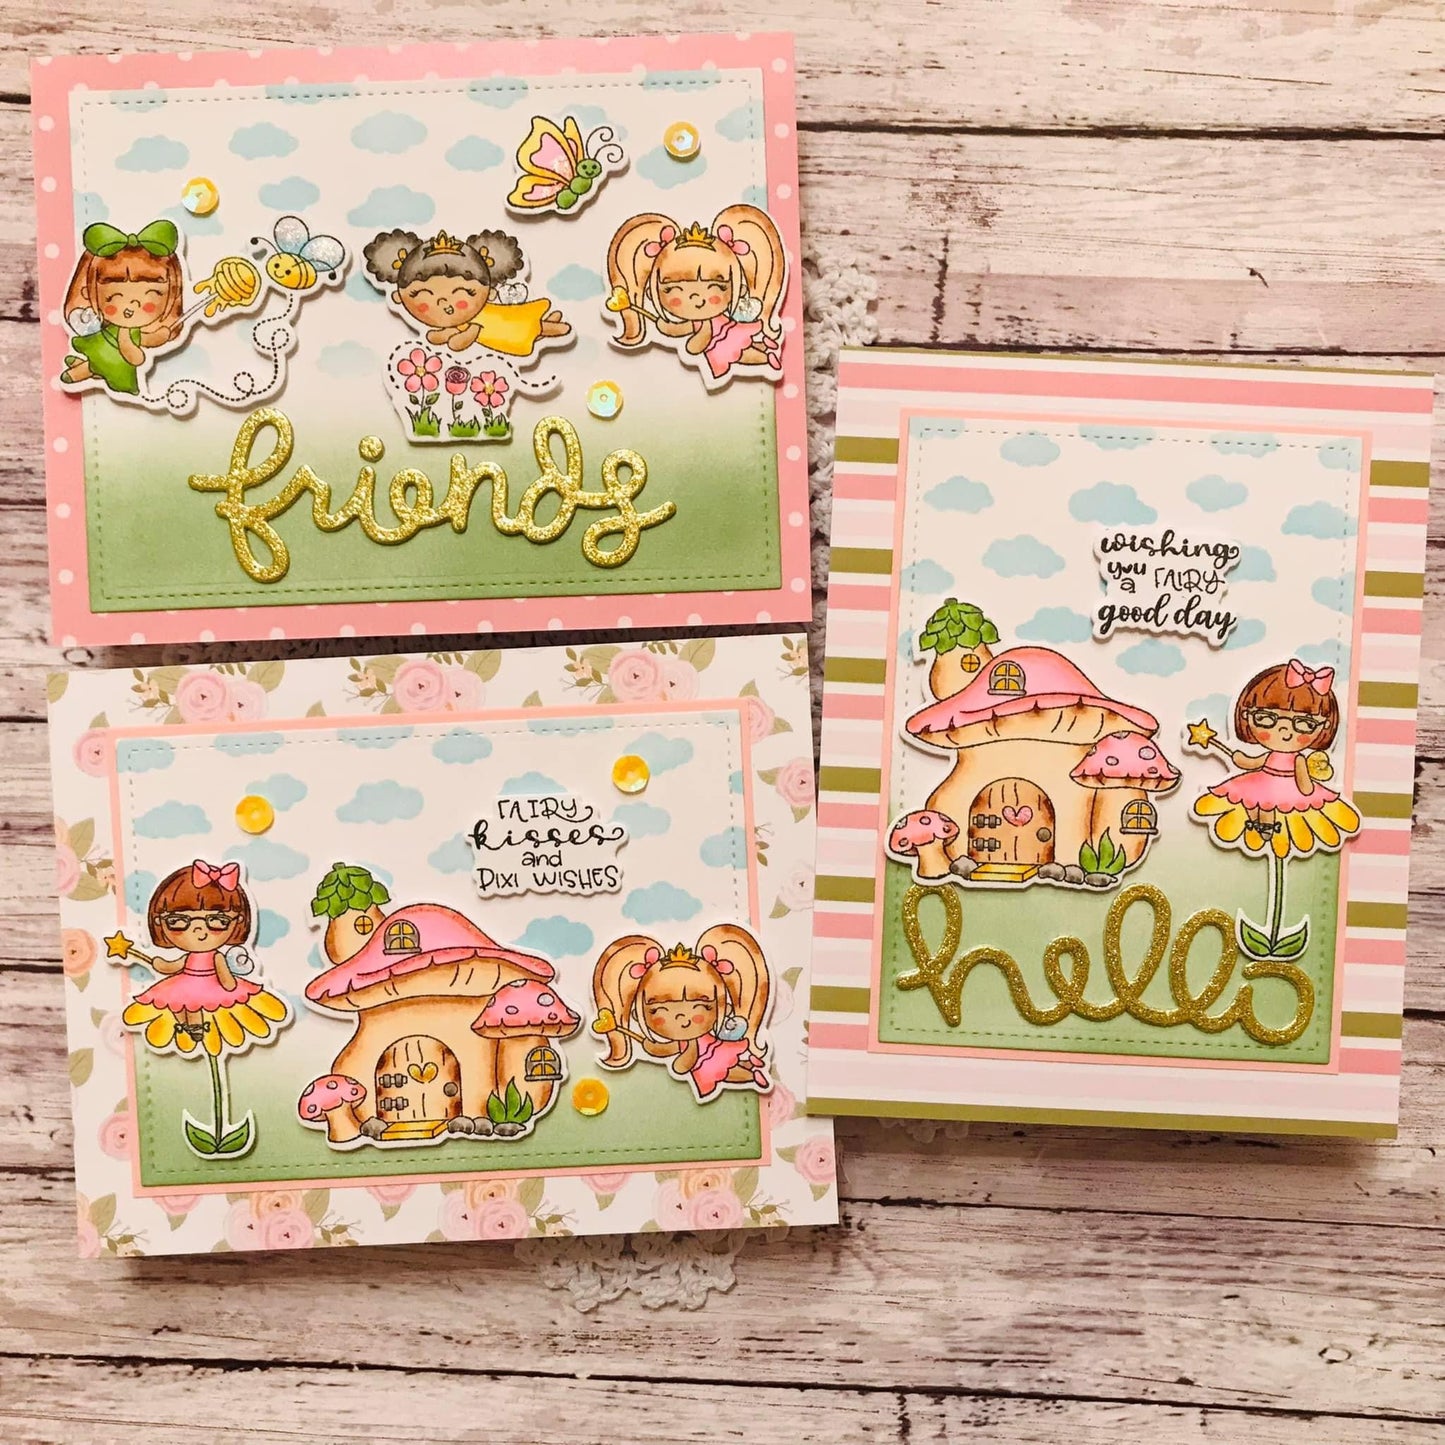 Pixi Dust Stamp and Fairy Pixi Cuts Bundle